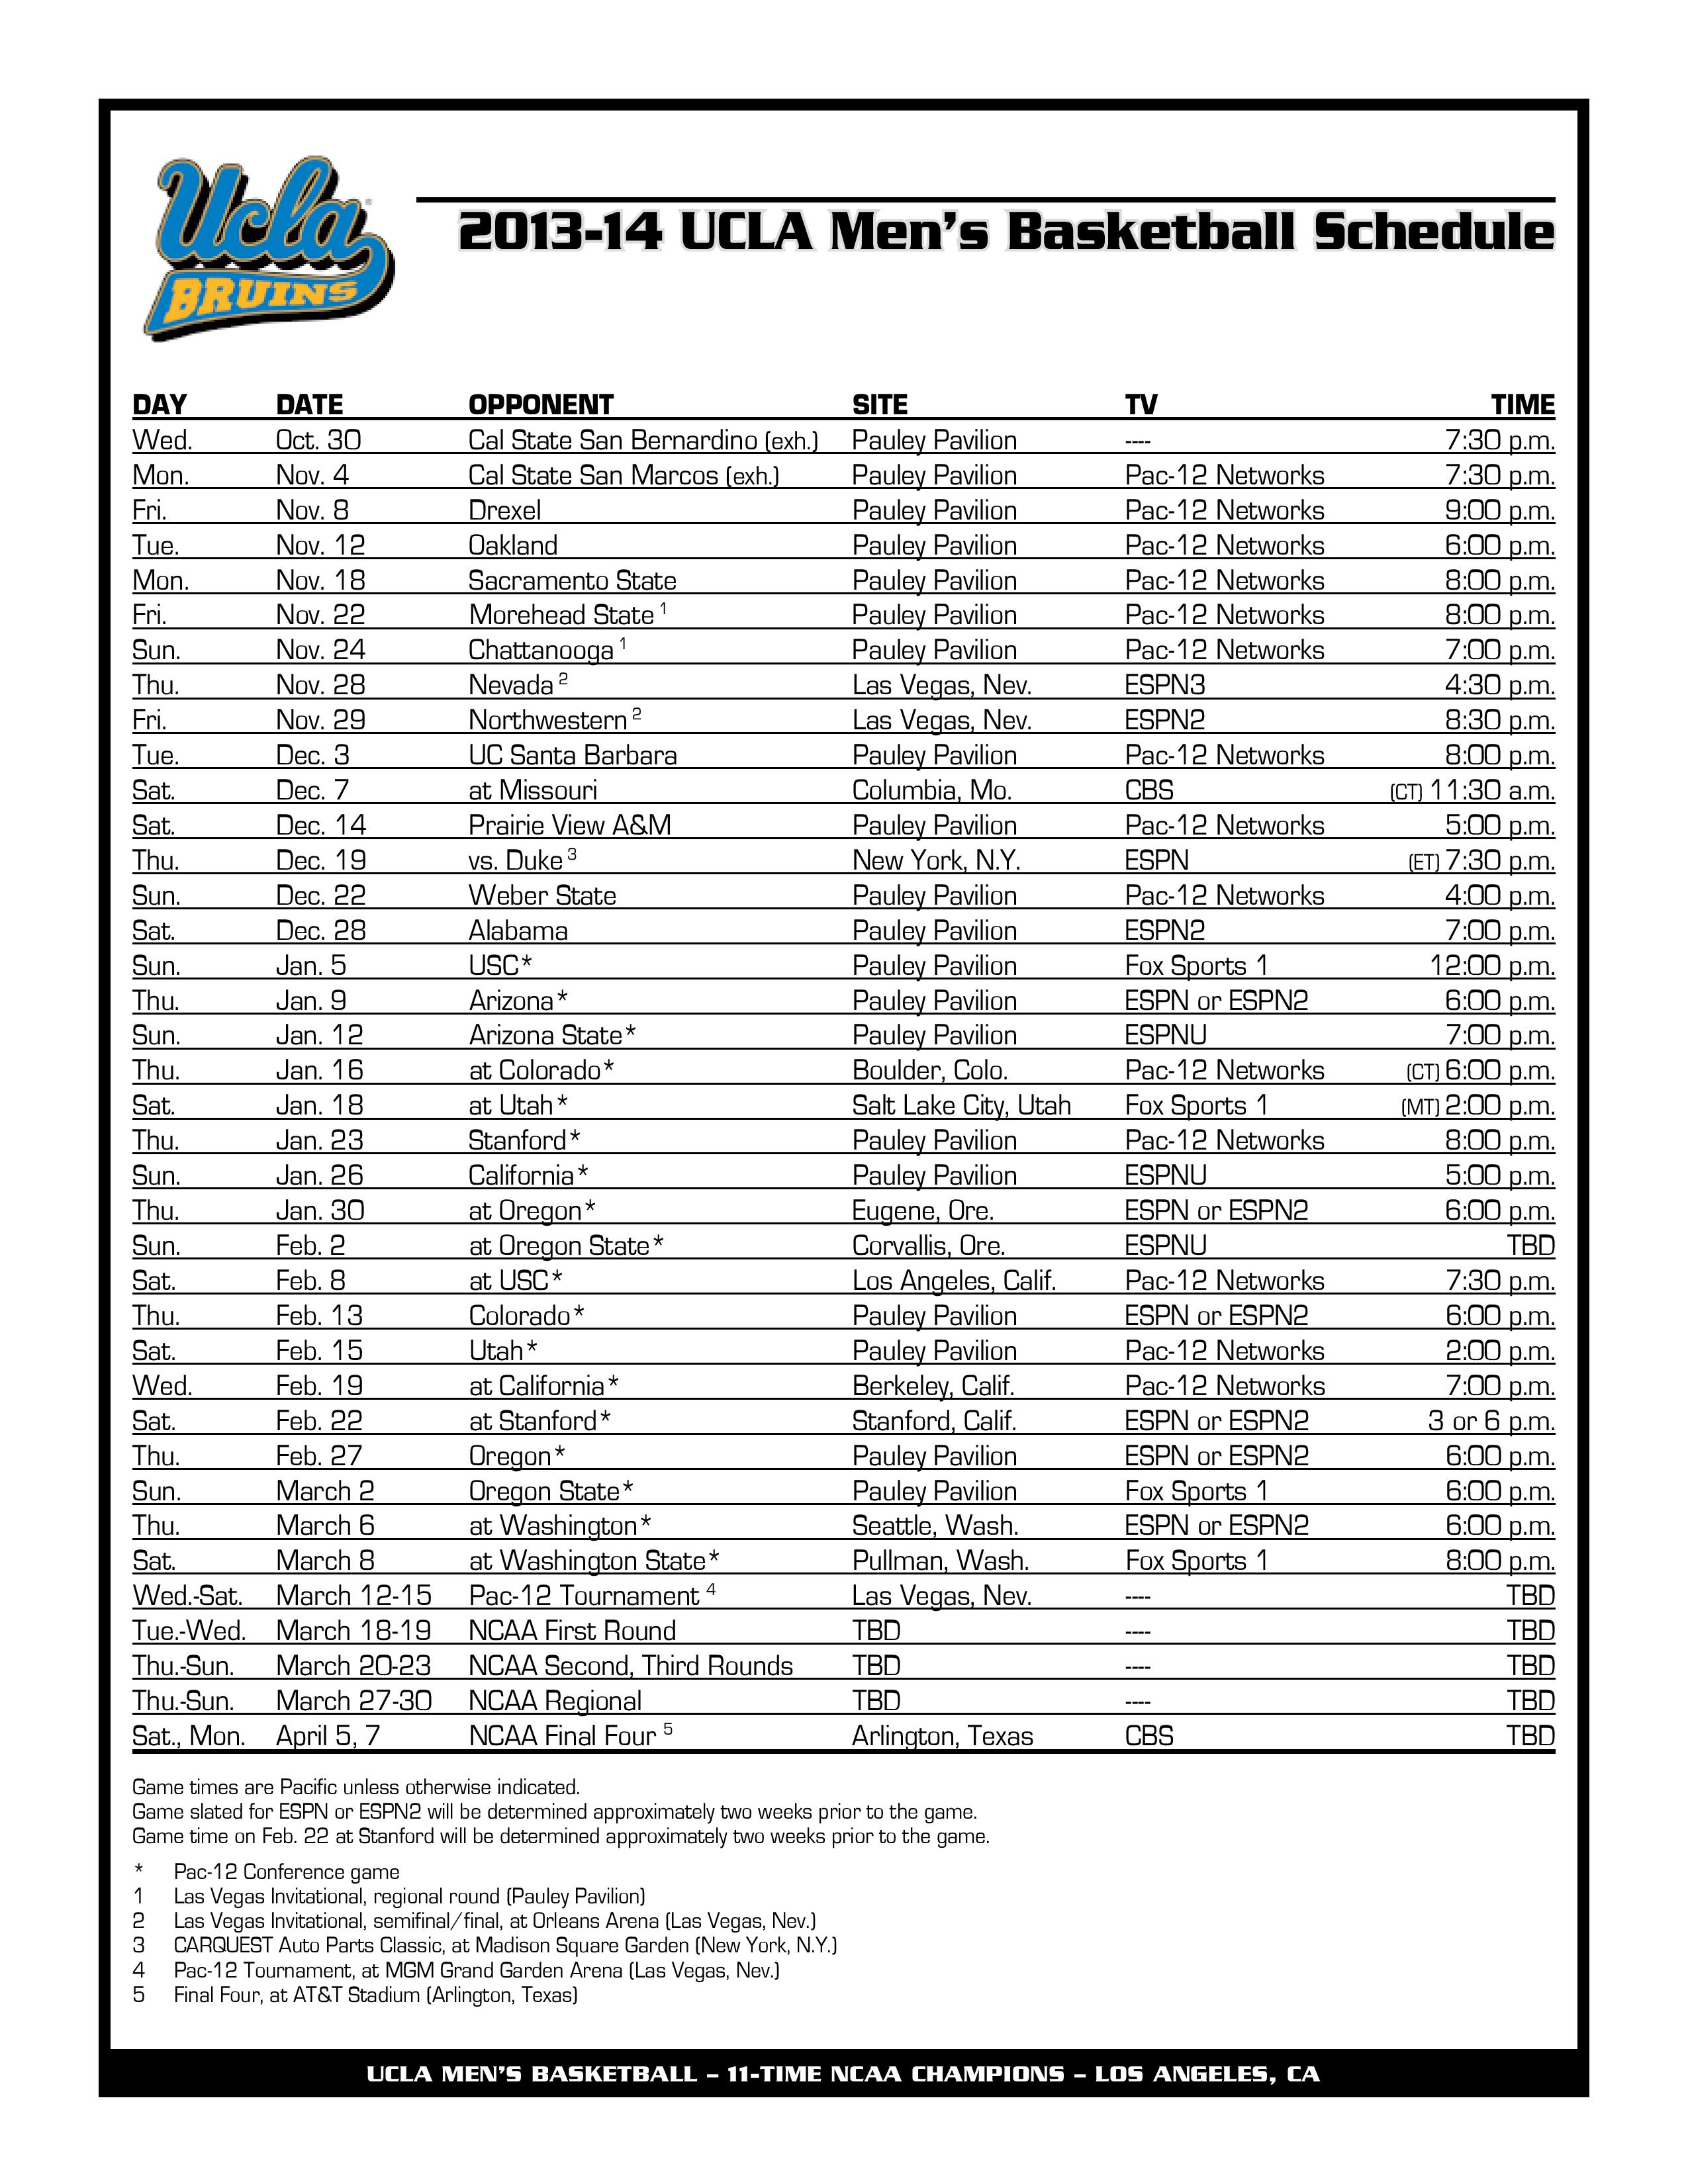 Basketball schedule | Inside UCLA with Jack Wang2550 x 3300